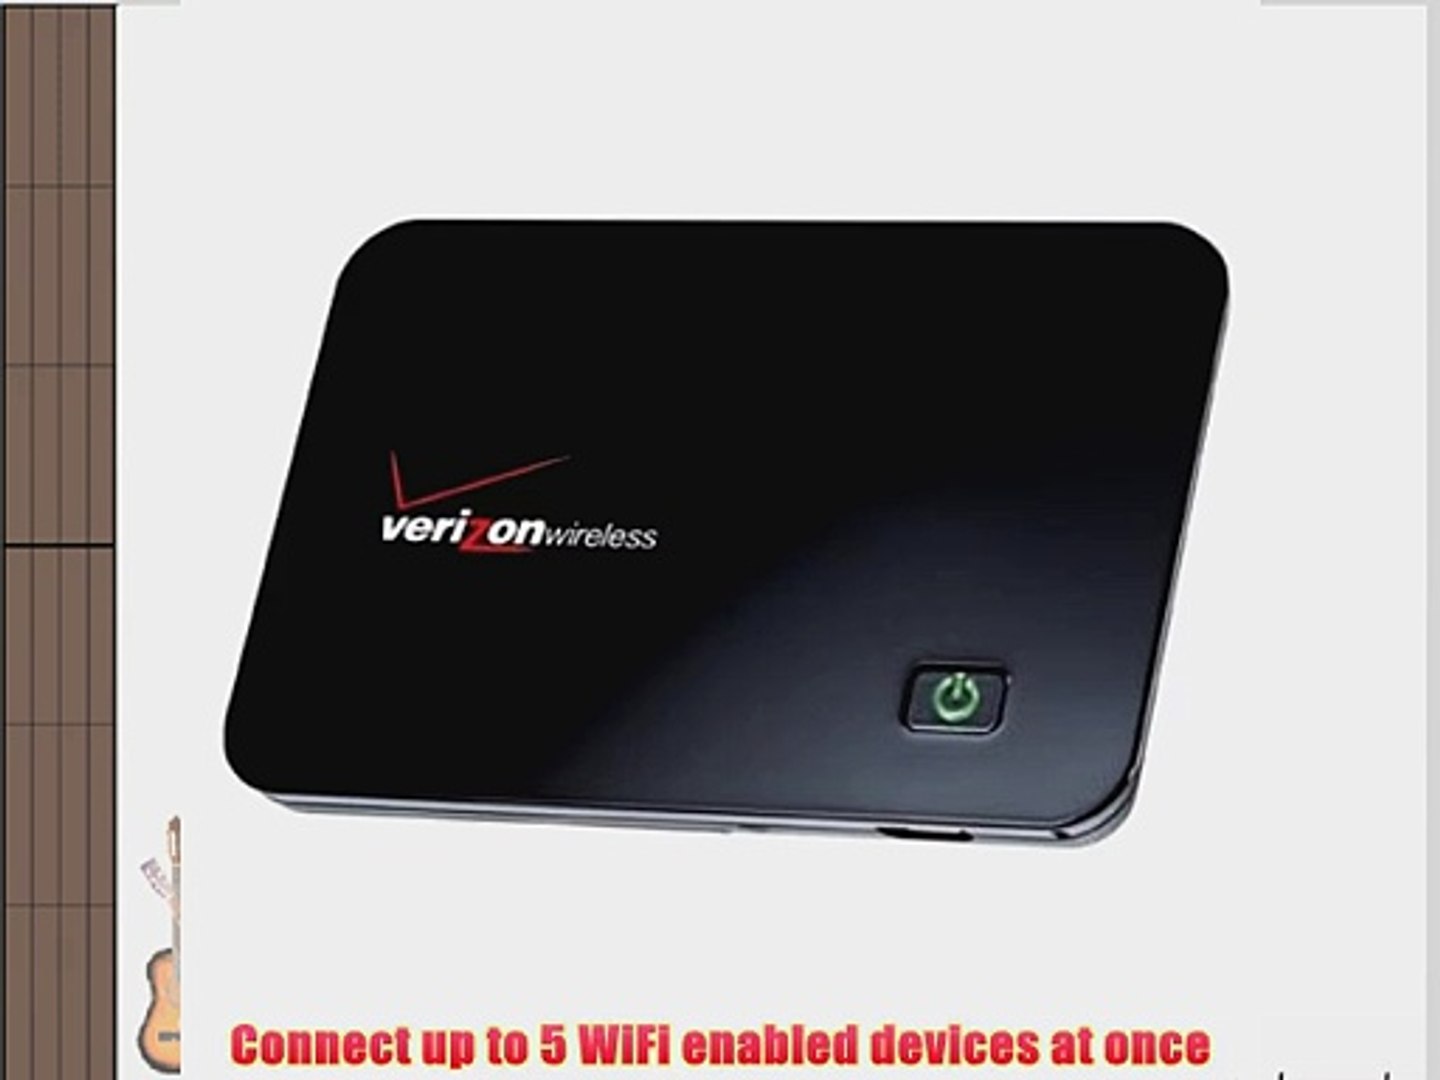 Novatel Wireless Mifi 2200 3g Mobile Wifi Hotspot Modem Flashed To Verizon Wireless Video Dailymotion